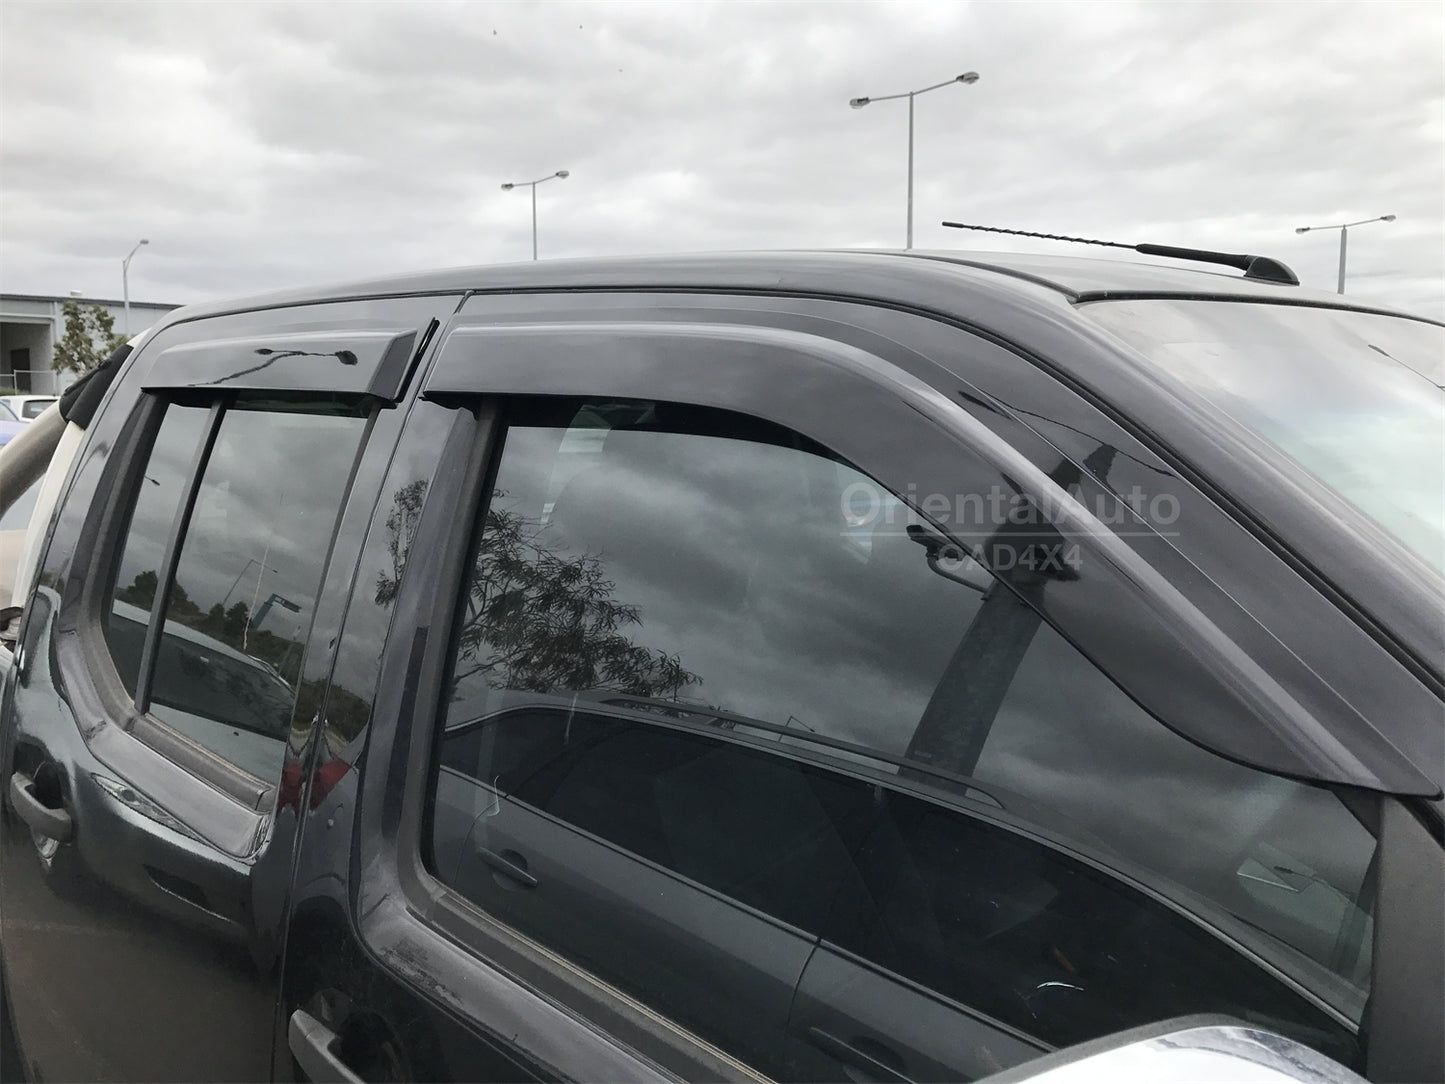 Bonnet Protector & Weathershields Weather shields Window Visor for Nissan Navara D40 Dual Cab 2005-2010 Spanish